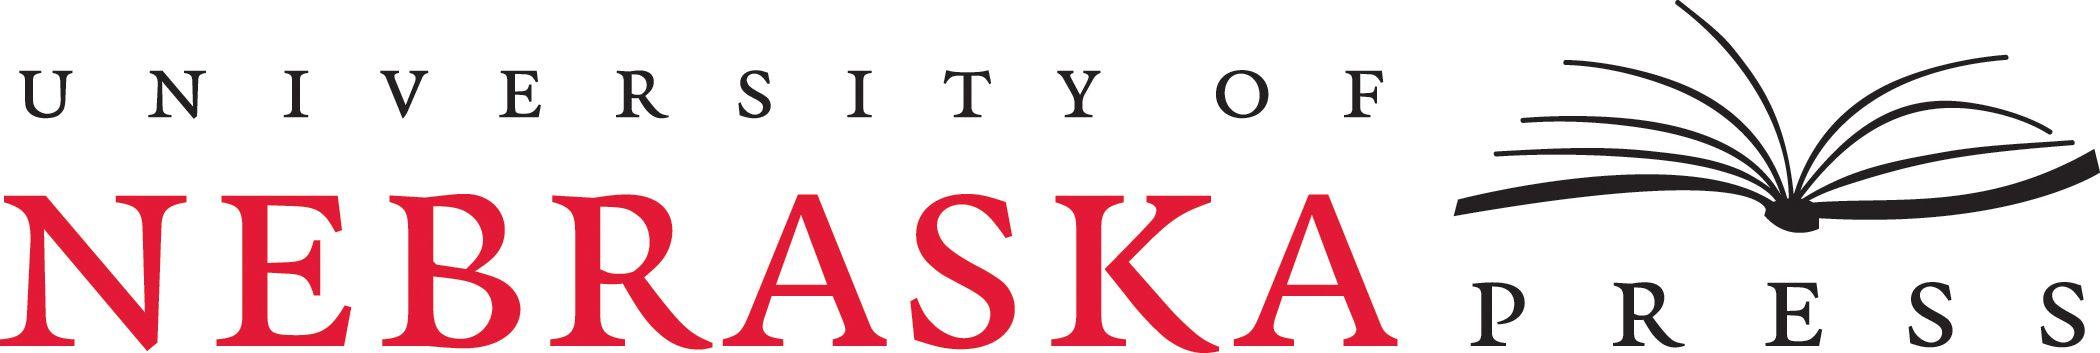 University of Nebraska Logo - University of Nebraska Press Acquisitions | Department of English ...